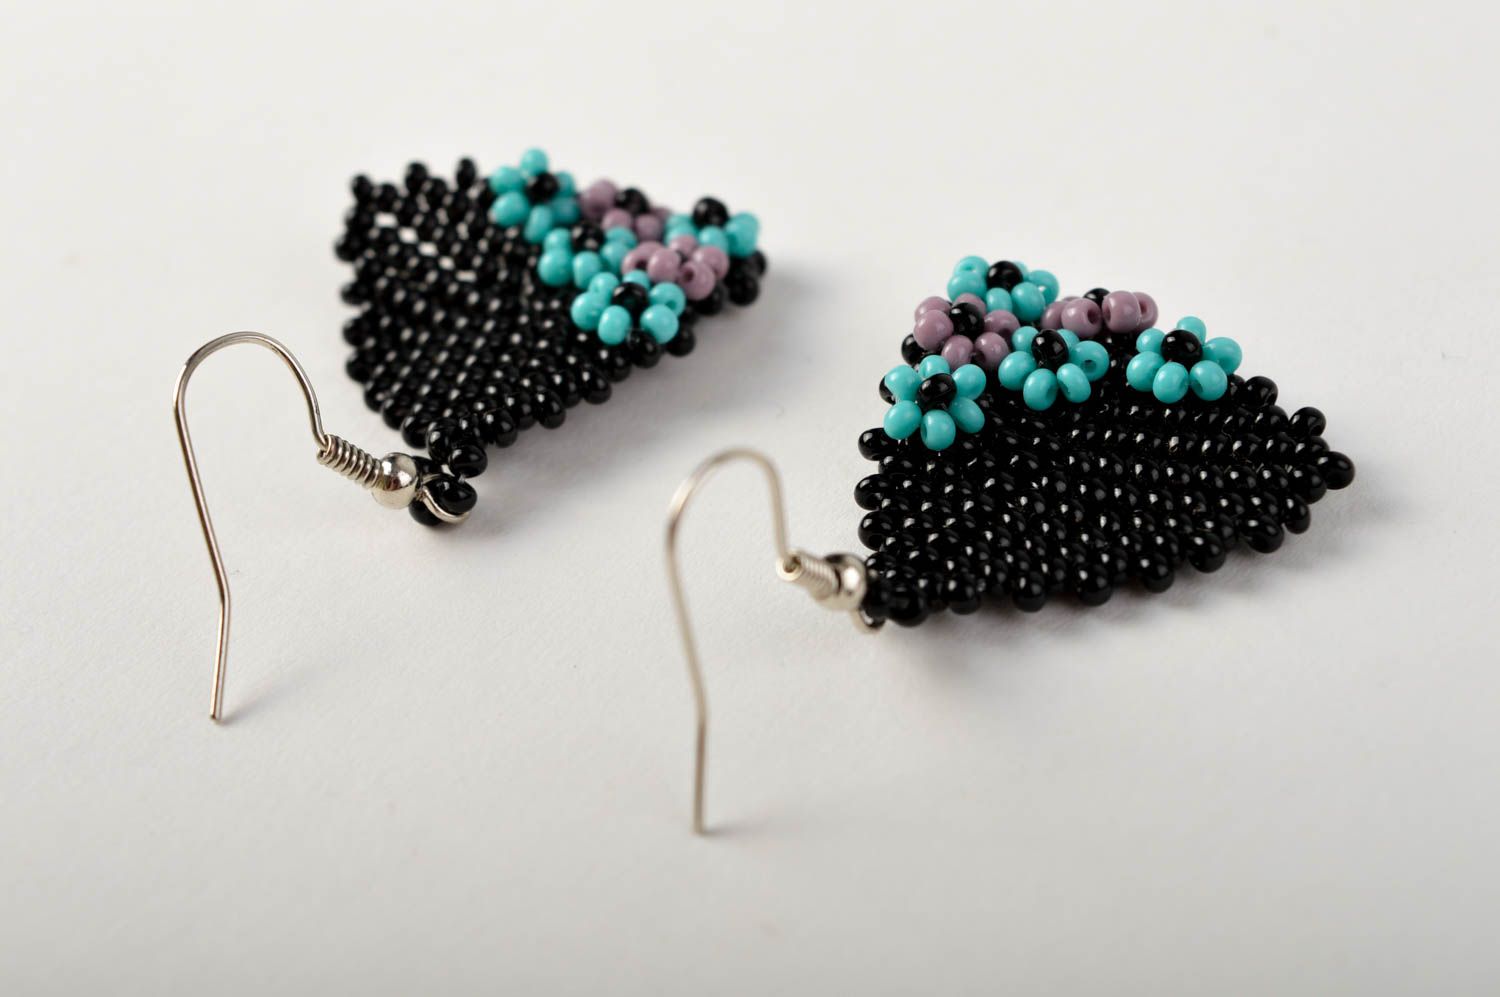 Unusual handmade beaded earrings fashion tips costume jewelry designs gift ideas photo 5